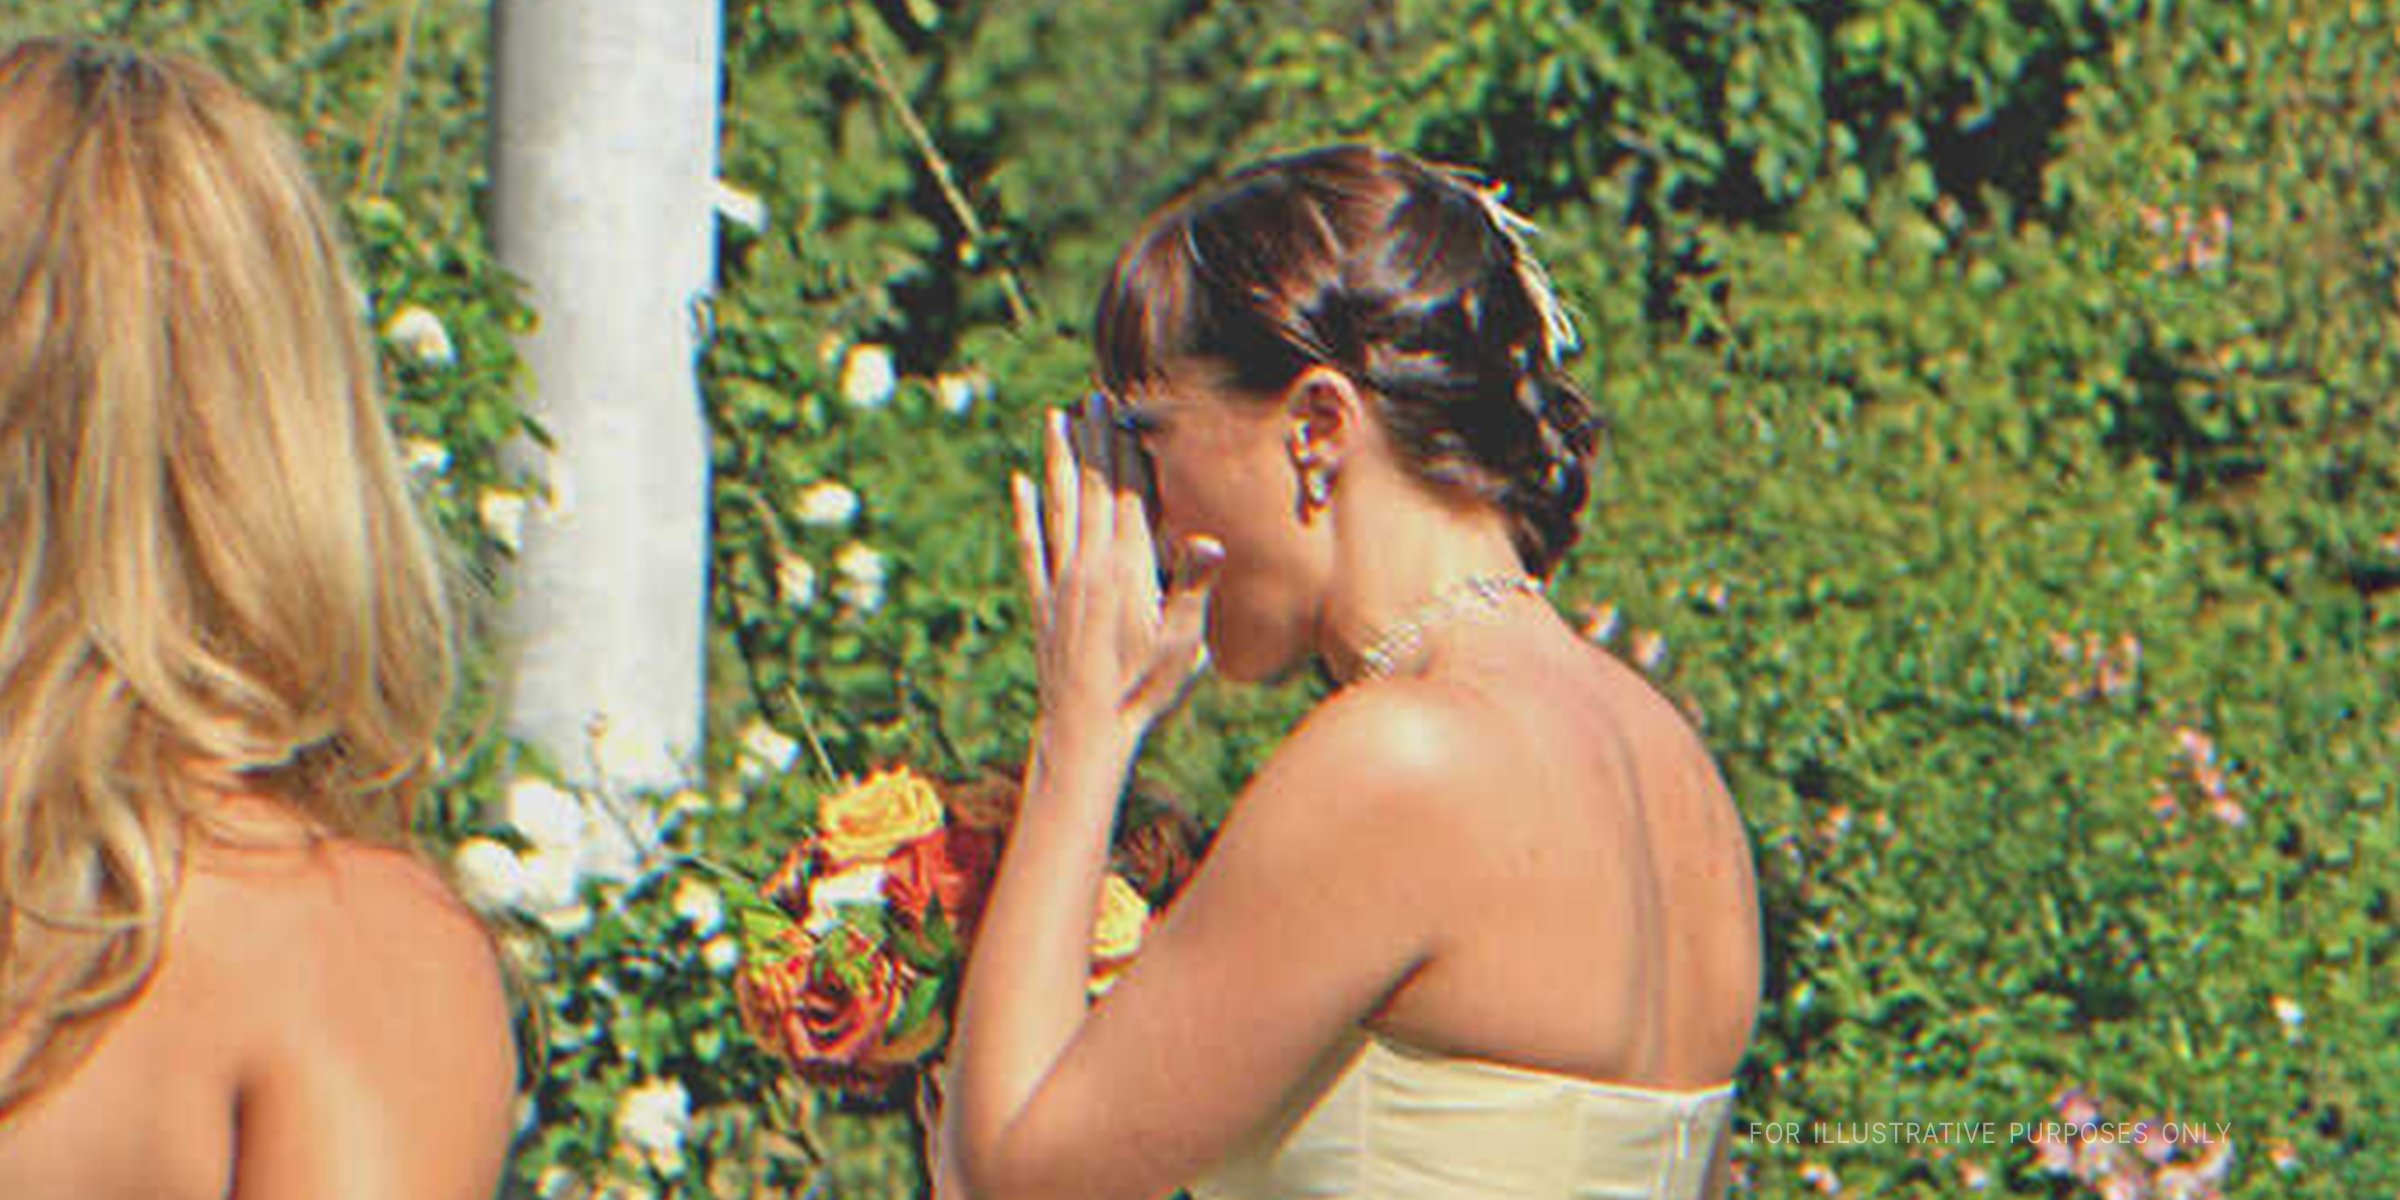 A bride in tears | Source: Flickr / quinn.anya (CC BY-SA 2.0)